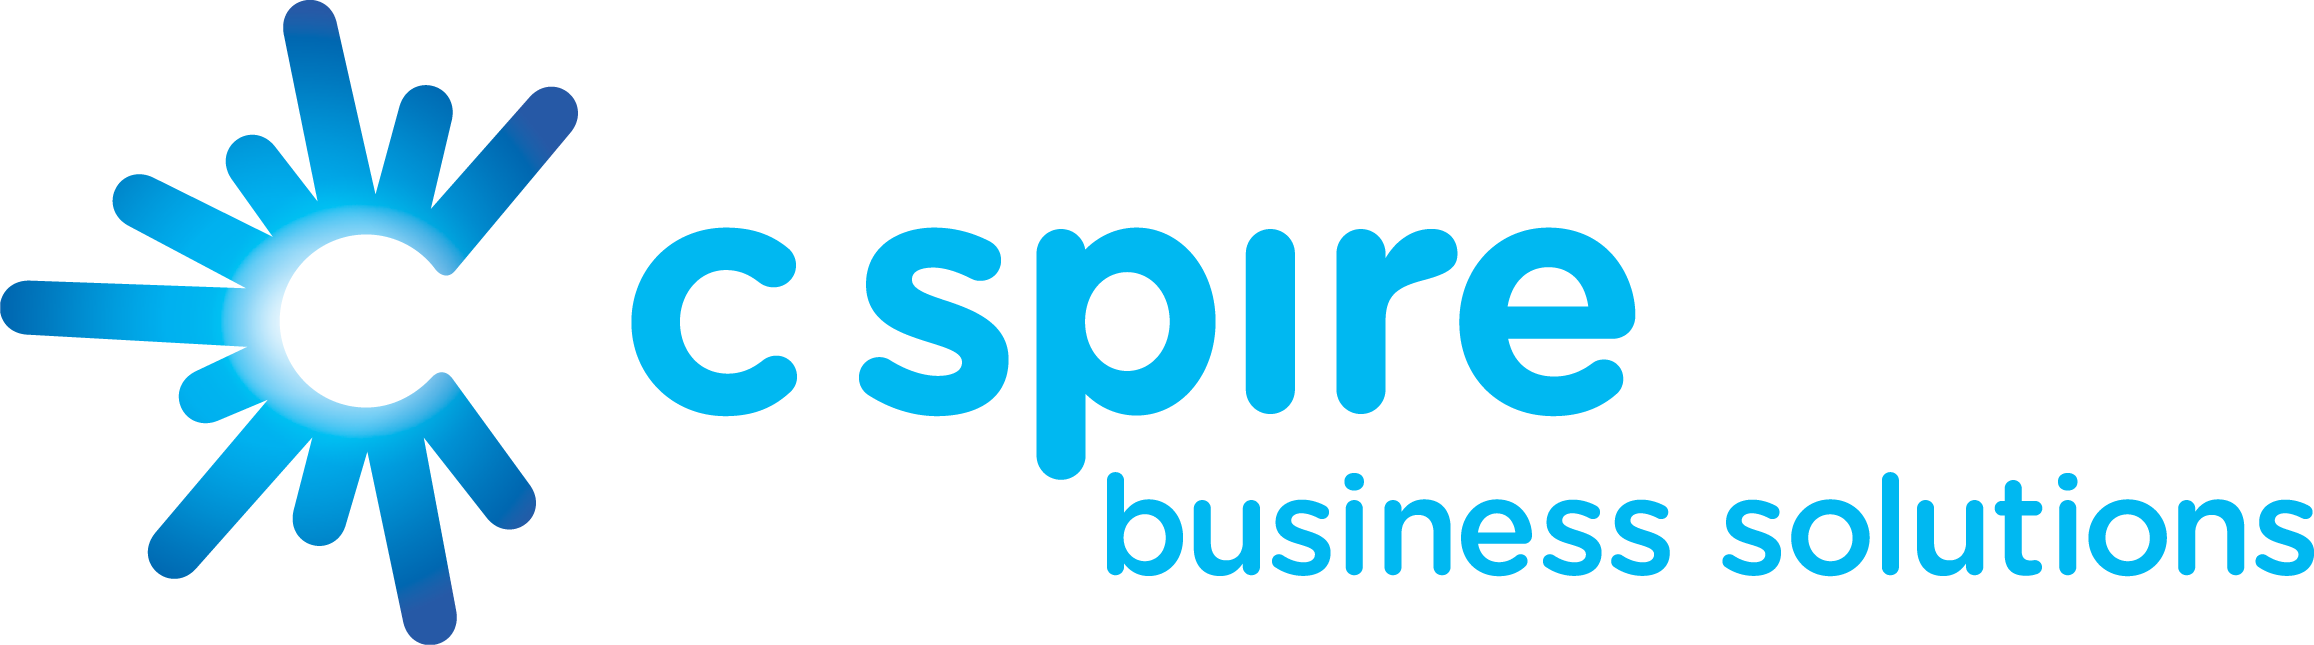 autozone, cspire business png logo #6248